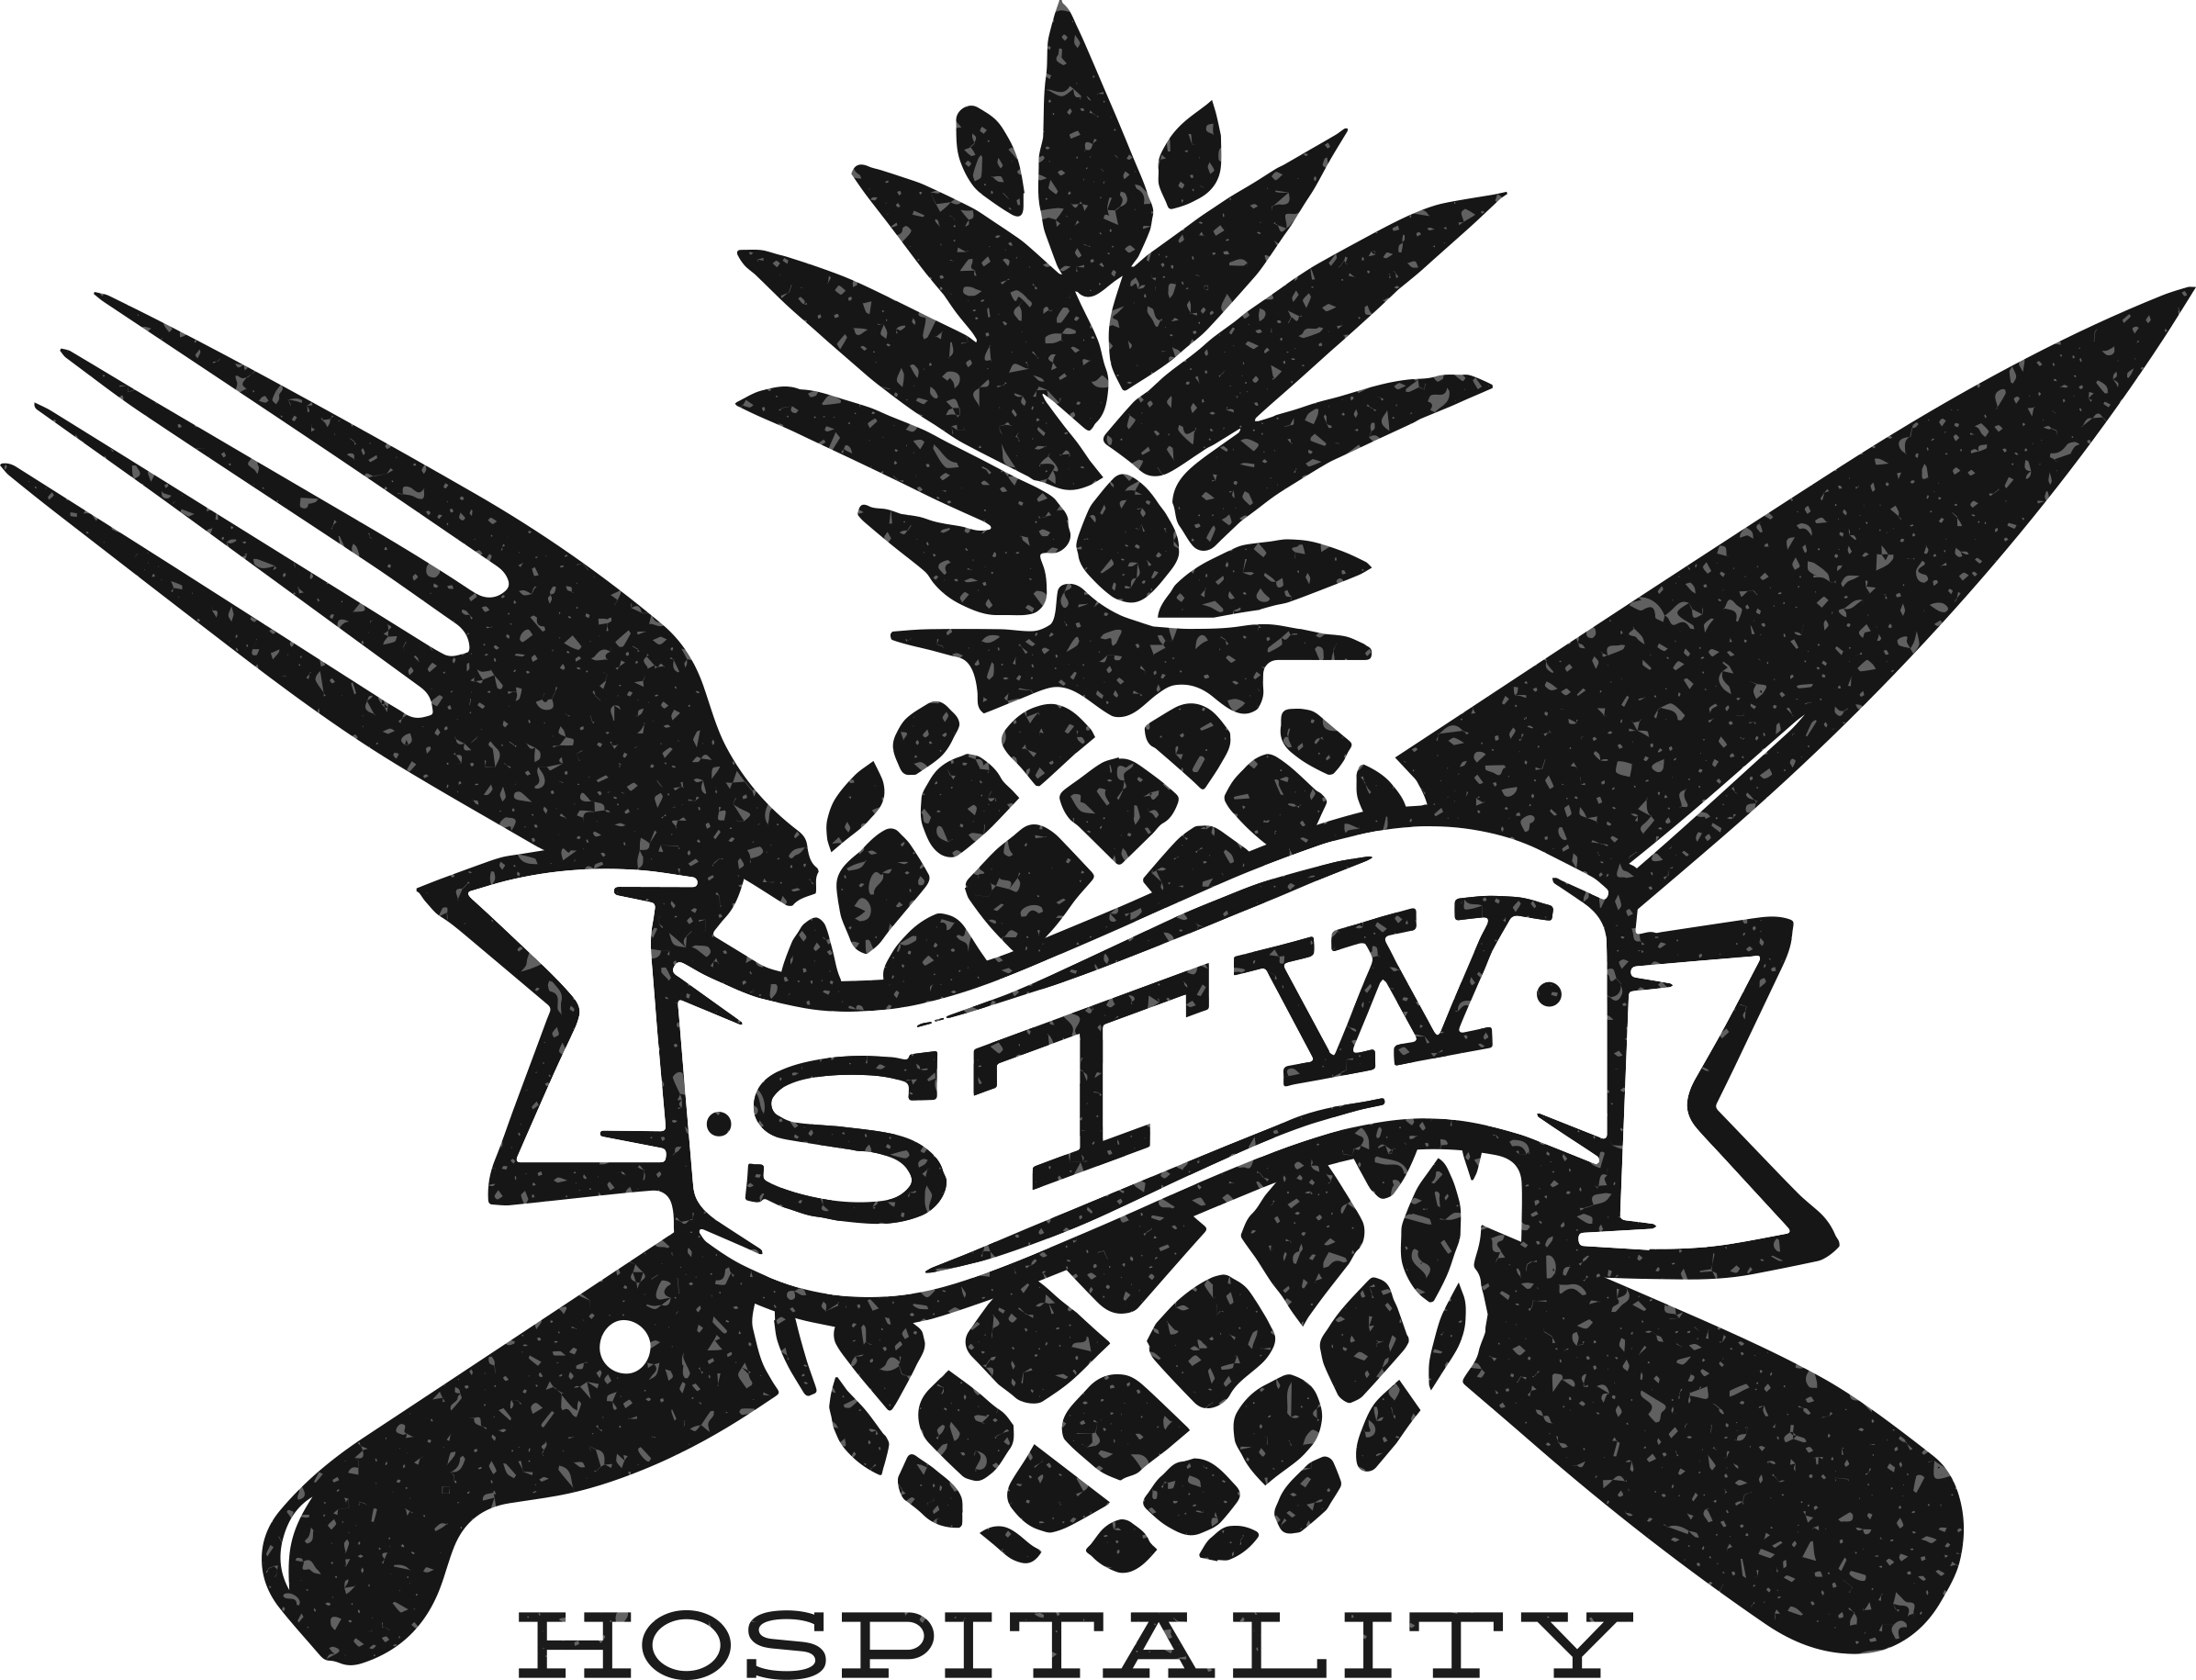 STW Hospitality